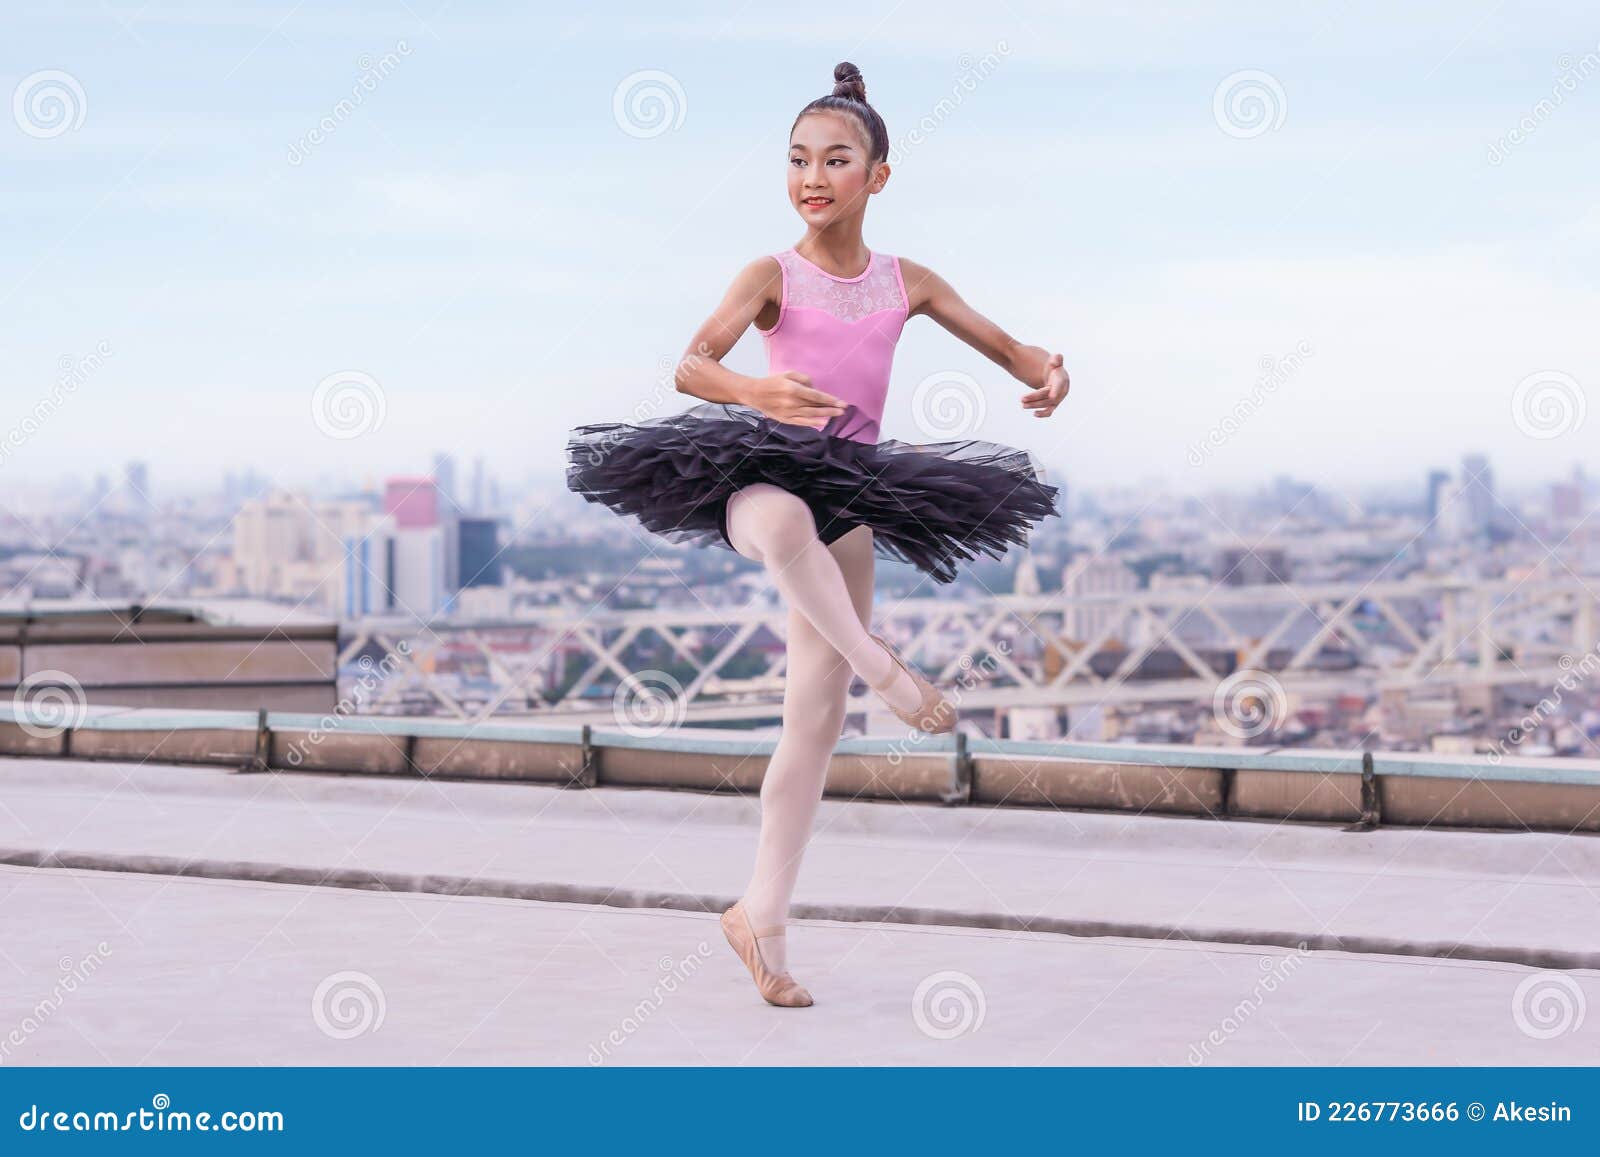 sende Bemyndige Vædde Asian Girl Ballerina Dancer Performing Ballet Dance on Rooftop Stock Photo  - Image of grace, flexibility: 226773666